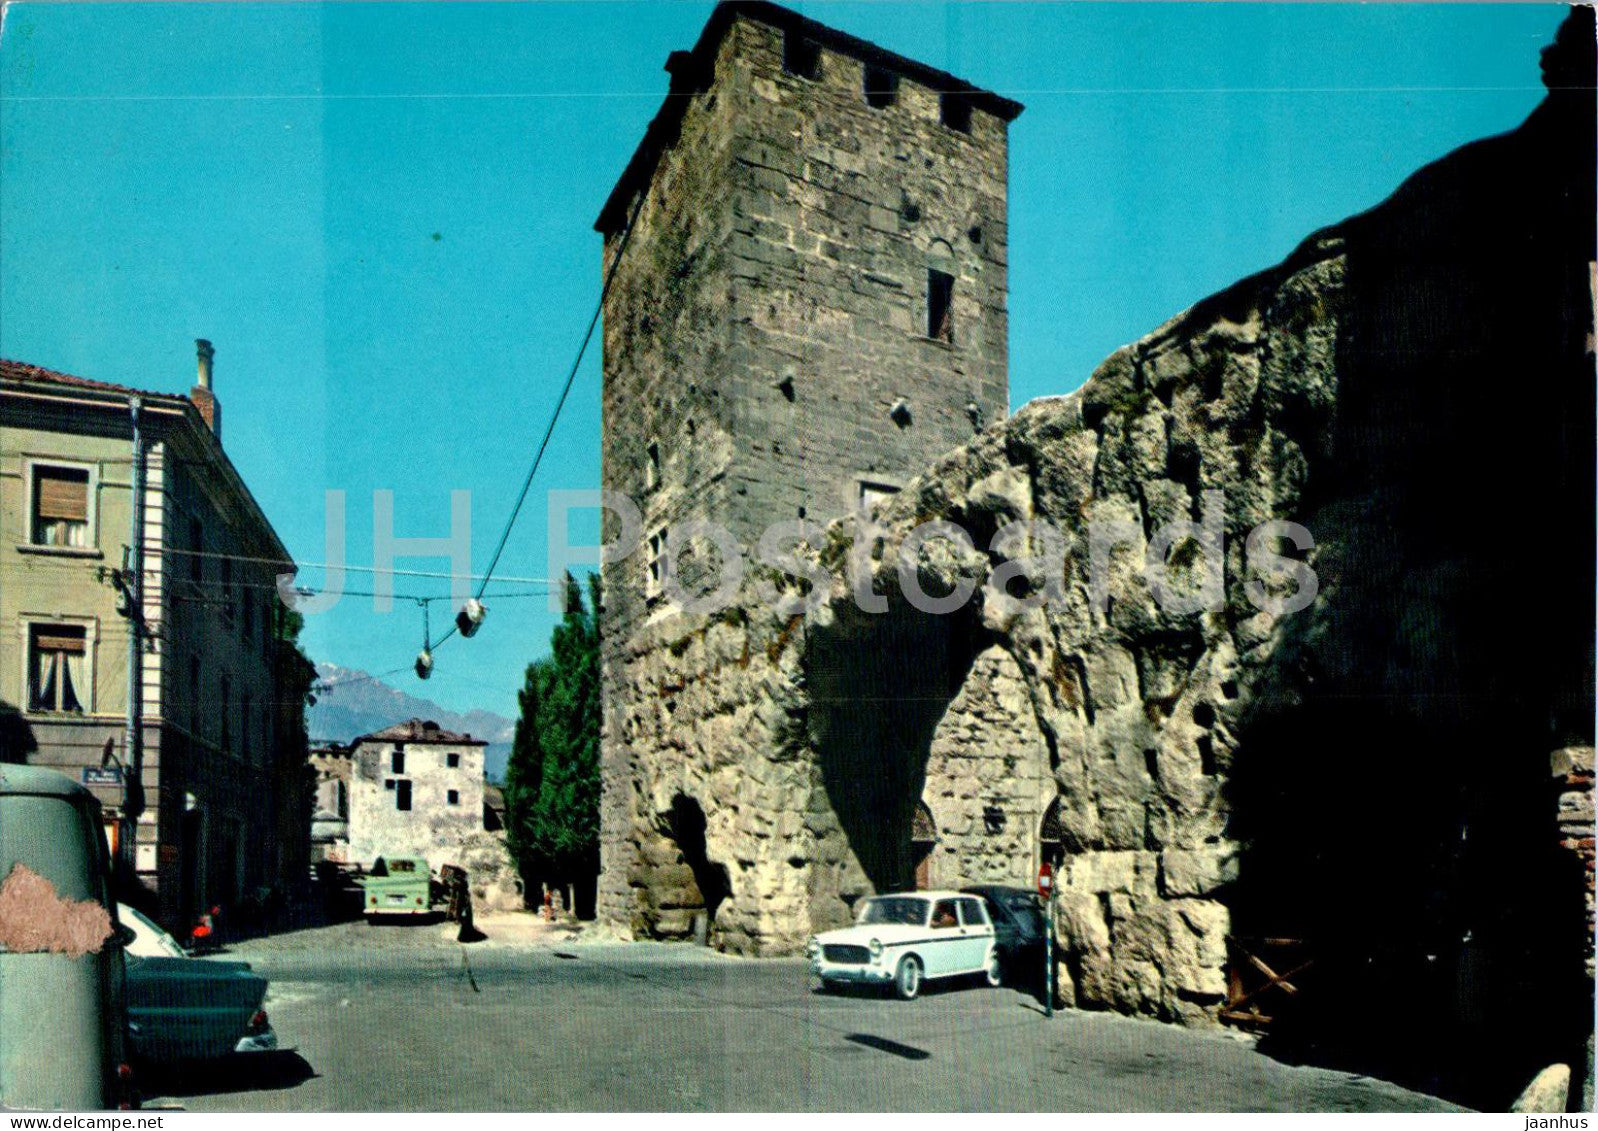 Aosta - Porte Pretoriane - Praetorian Gates - car - 43 - Italy - unused - JH Postcards